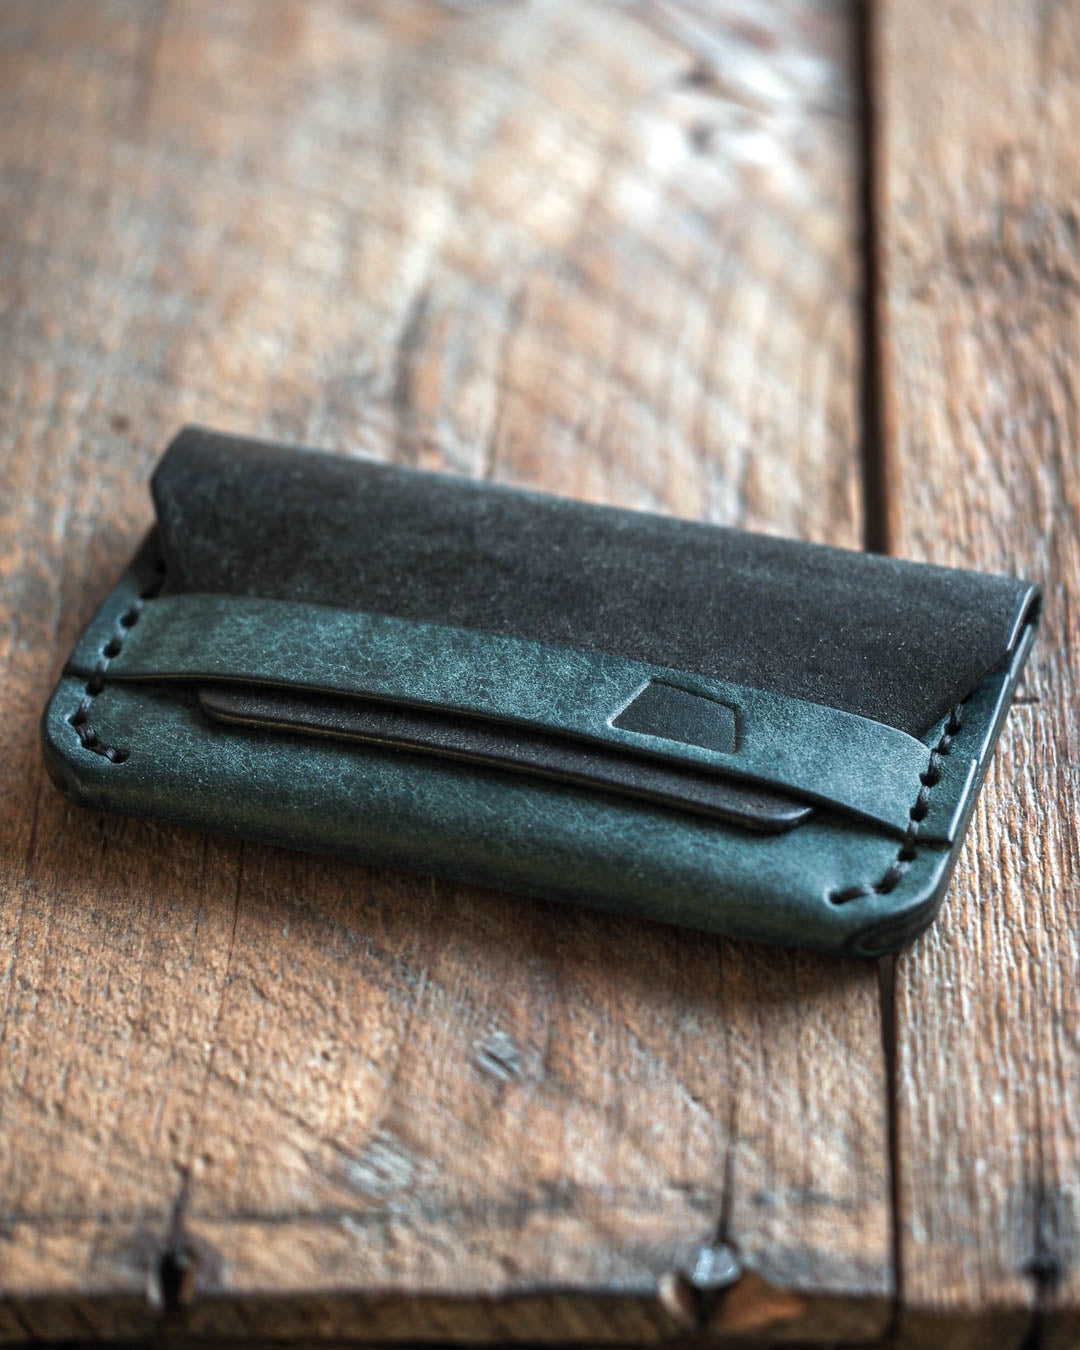 Luava handmade leather wallet gofer nocturnal